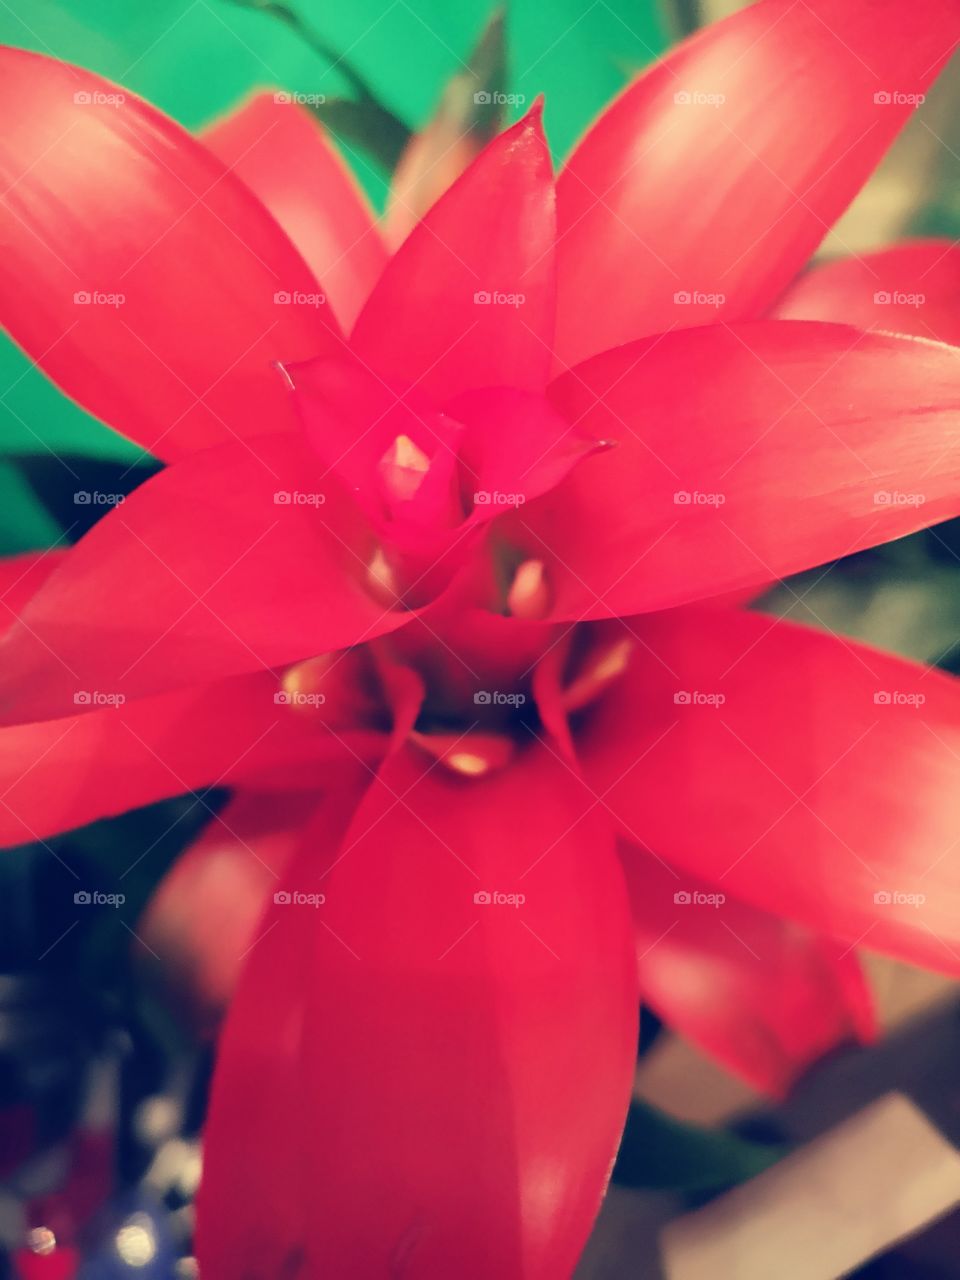 02-11-18 Red flower